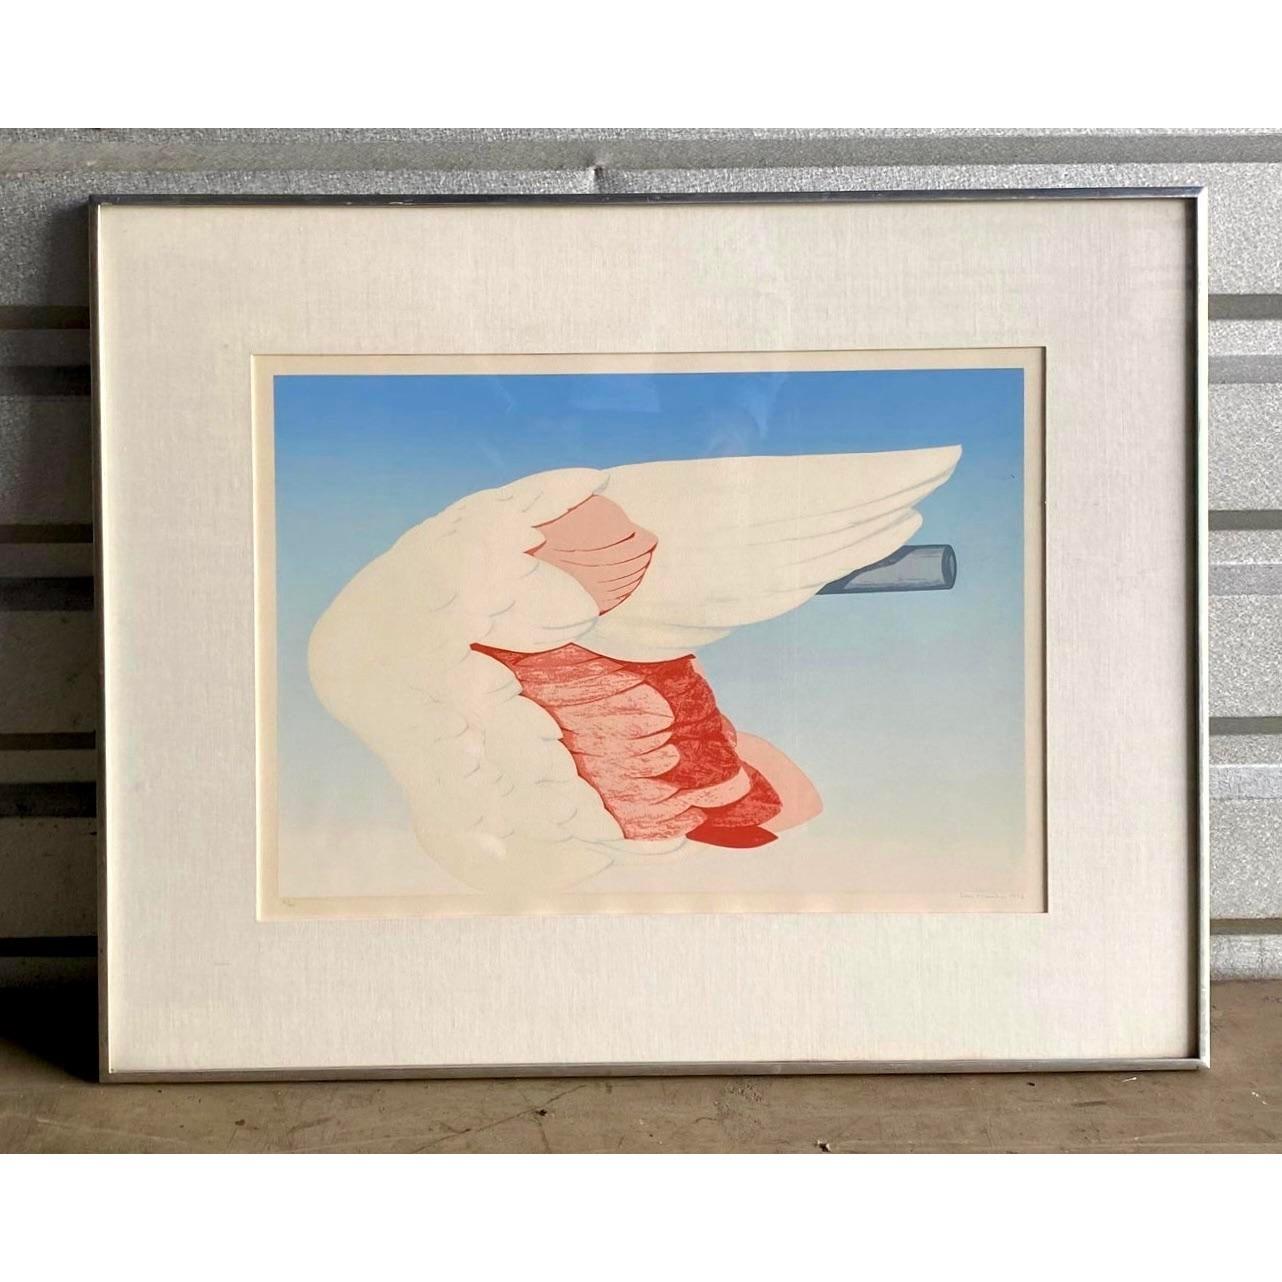 Metal Vintage Boho Signed Original 1972 Lithograph of Flamingo Wing For Sale